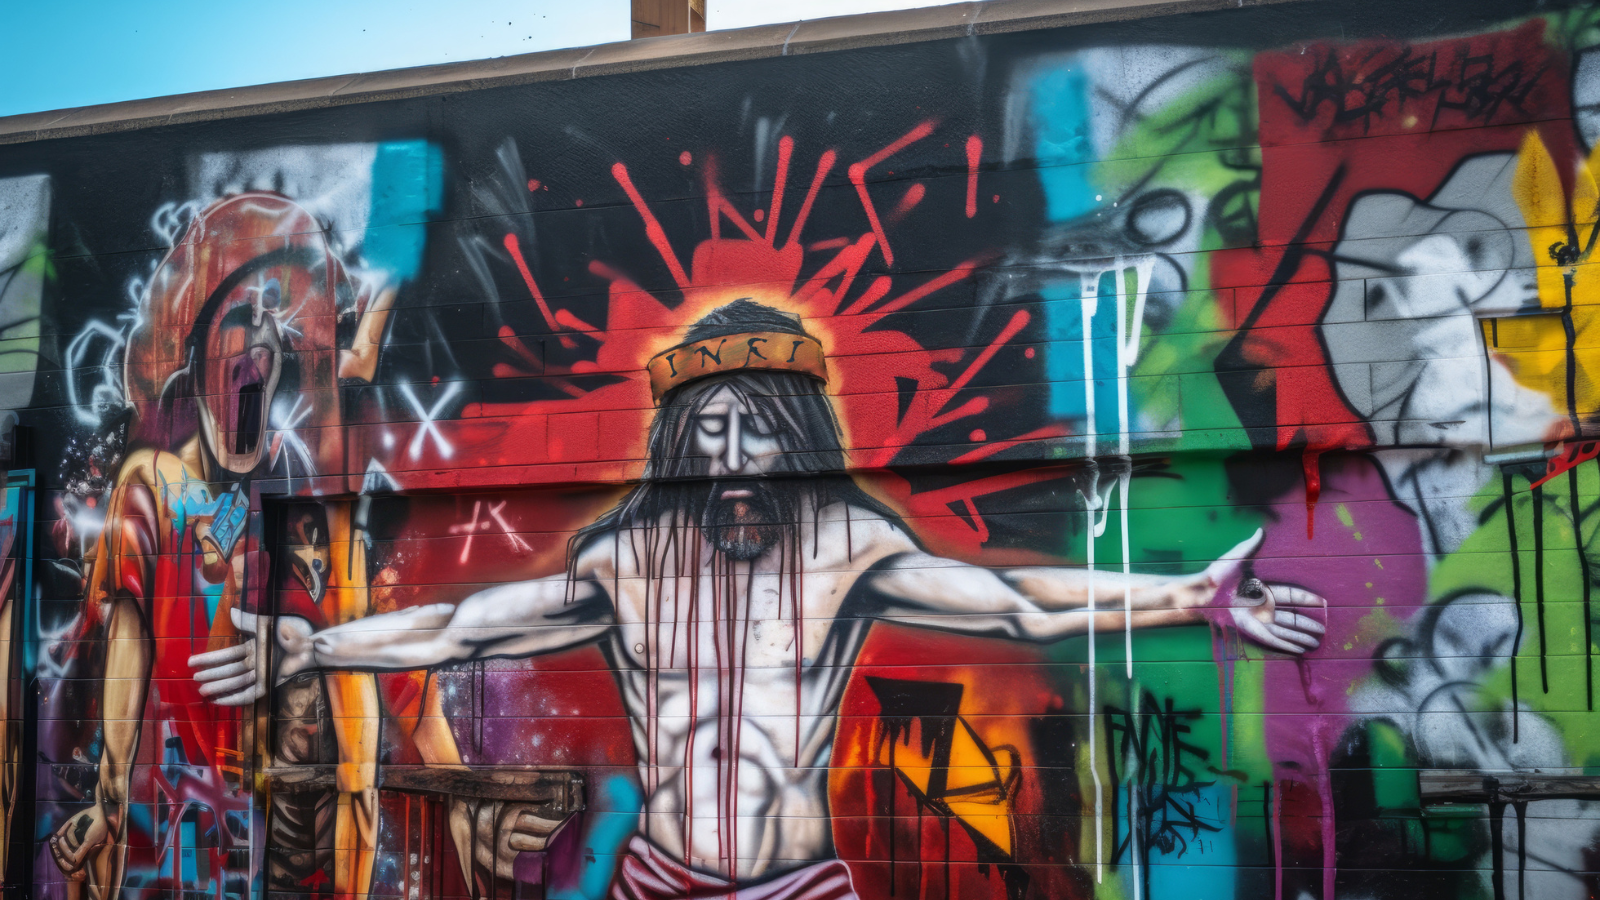 graffiti painting art showing Jesus